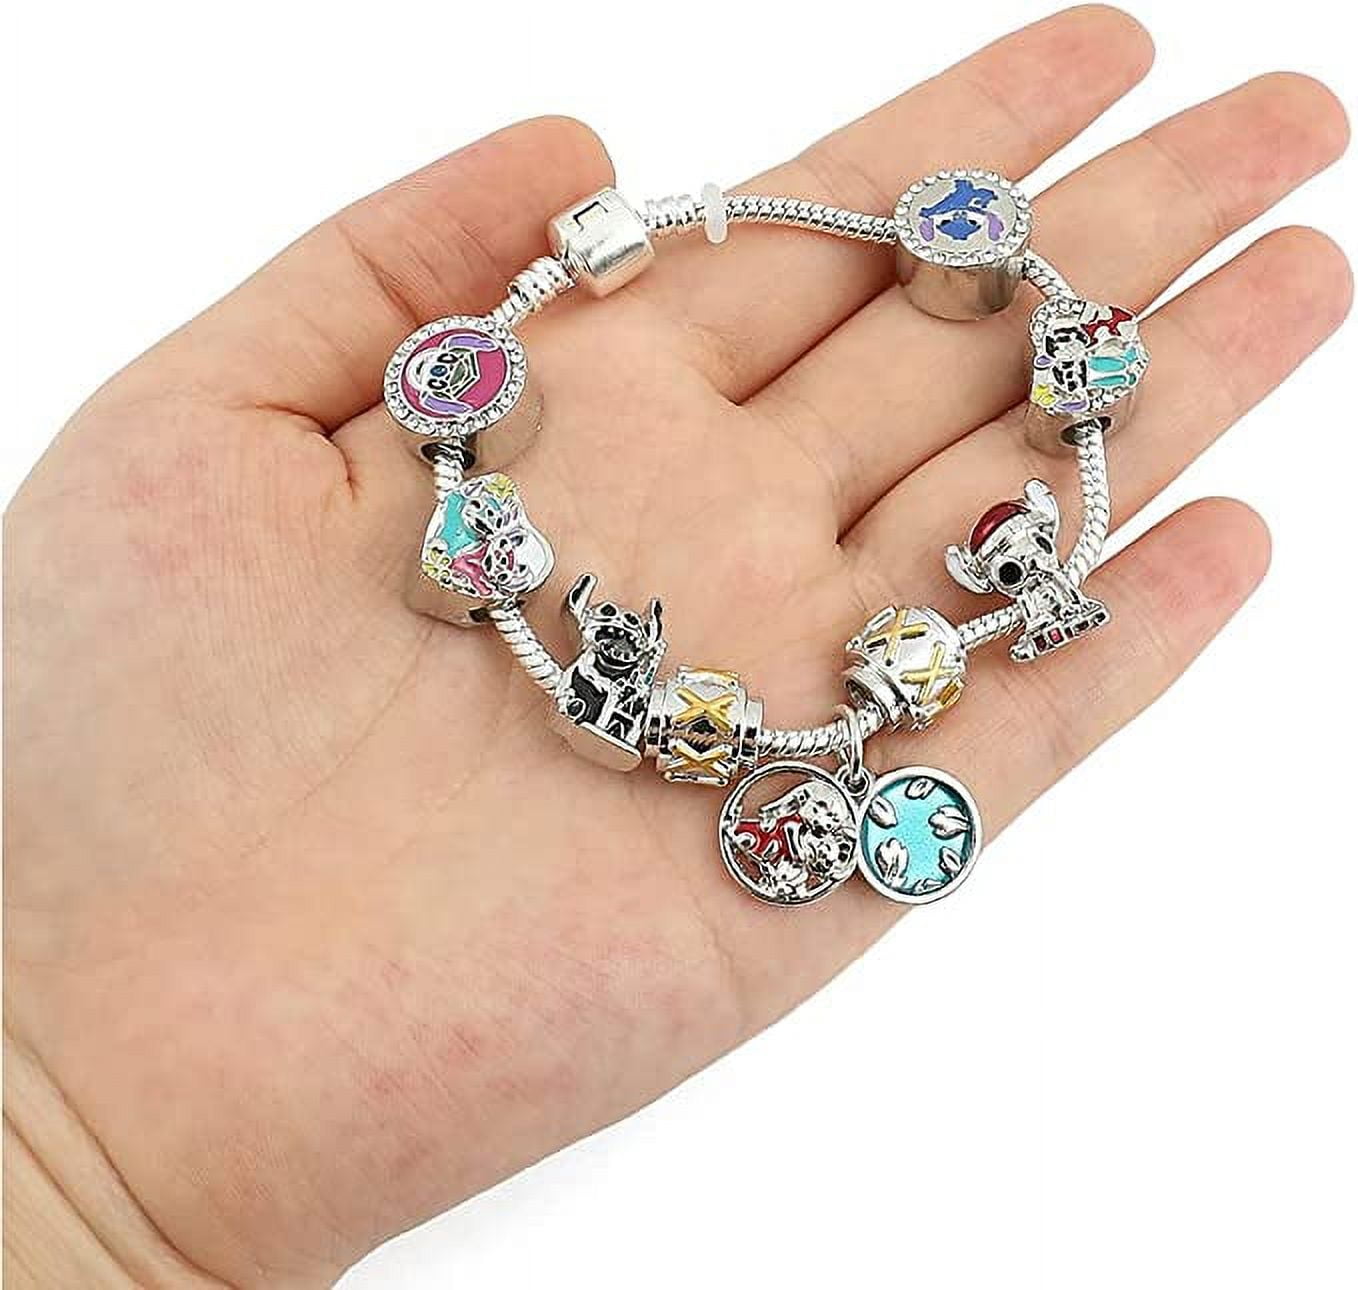 Anime Stitch Charm Bracelet Jewelry - Ohana Means Family Anime Cartoon Charm Bracelet Gifts for Women Girl, Adult Unisex, Size: Medium, Blue